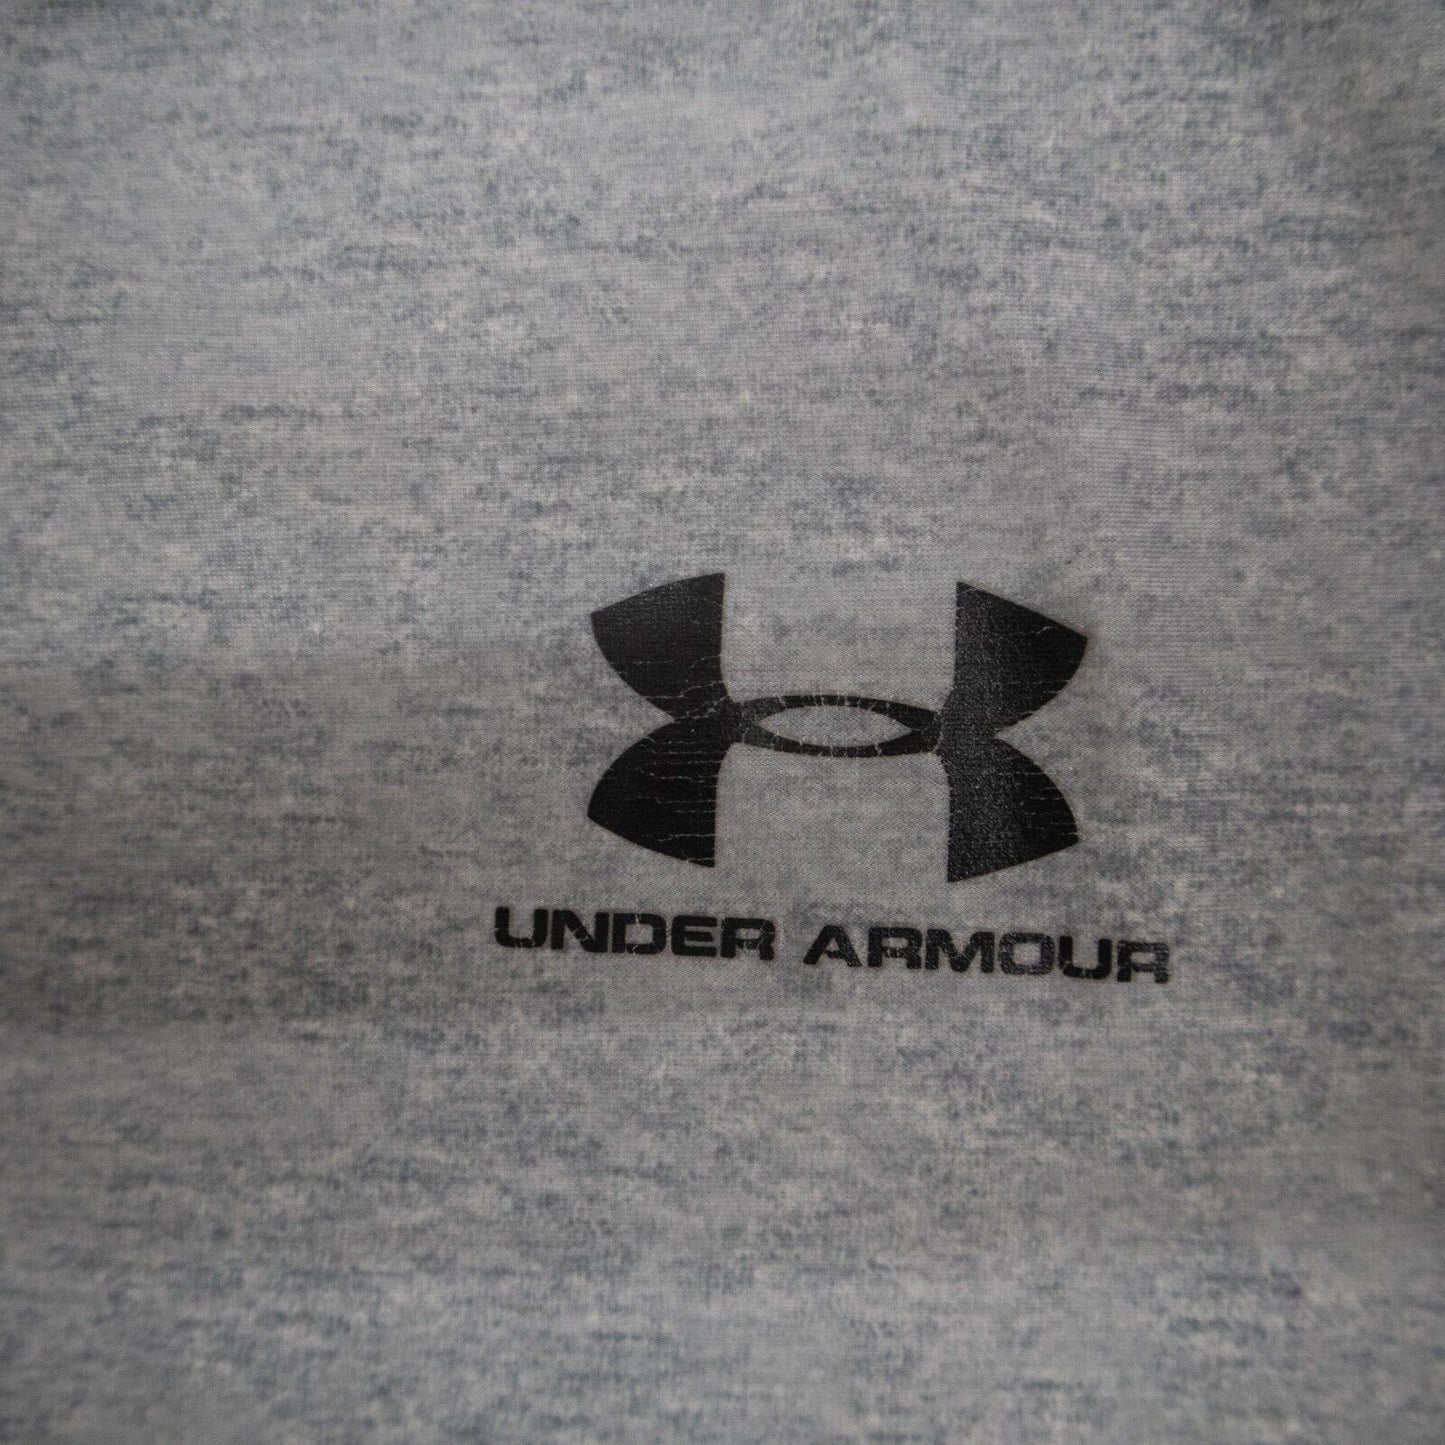 Under Armour Men's Crew Neck Slim Fit T-Shirt Short Sleeves Gray Size Medium